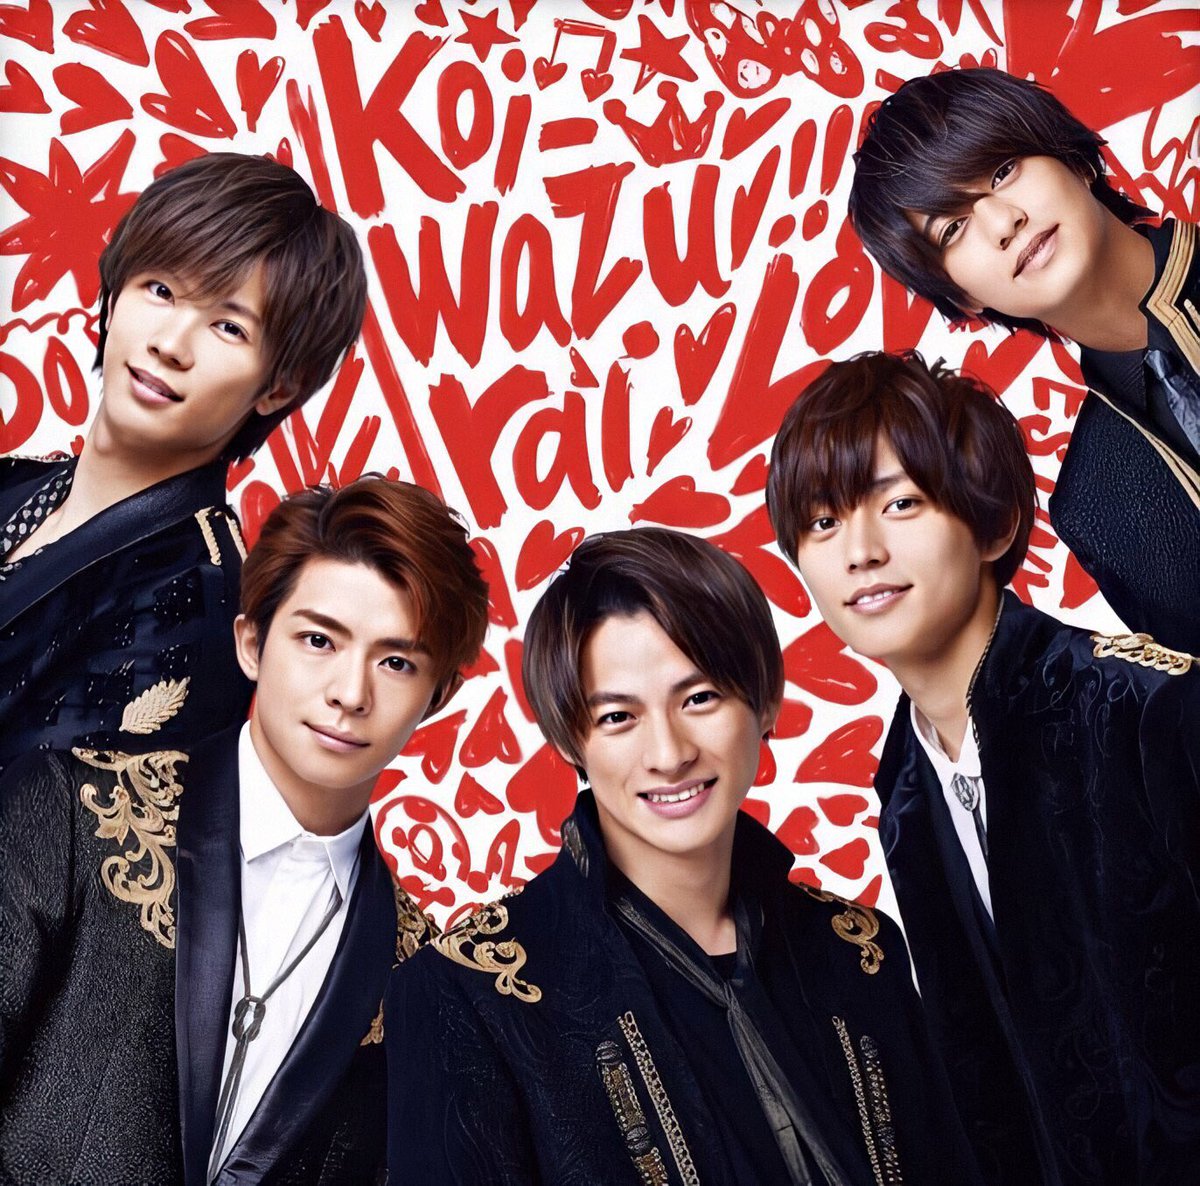 『King & Prince - STEAL YOUR NIGHT 歌詞』収録の『koi-wazurai』ジャケット